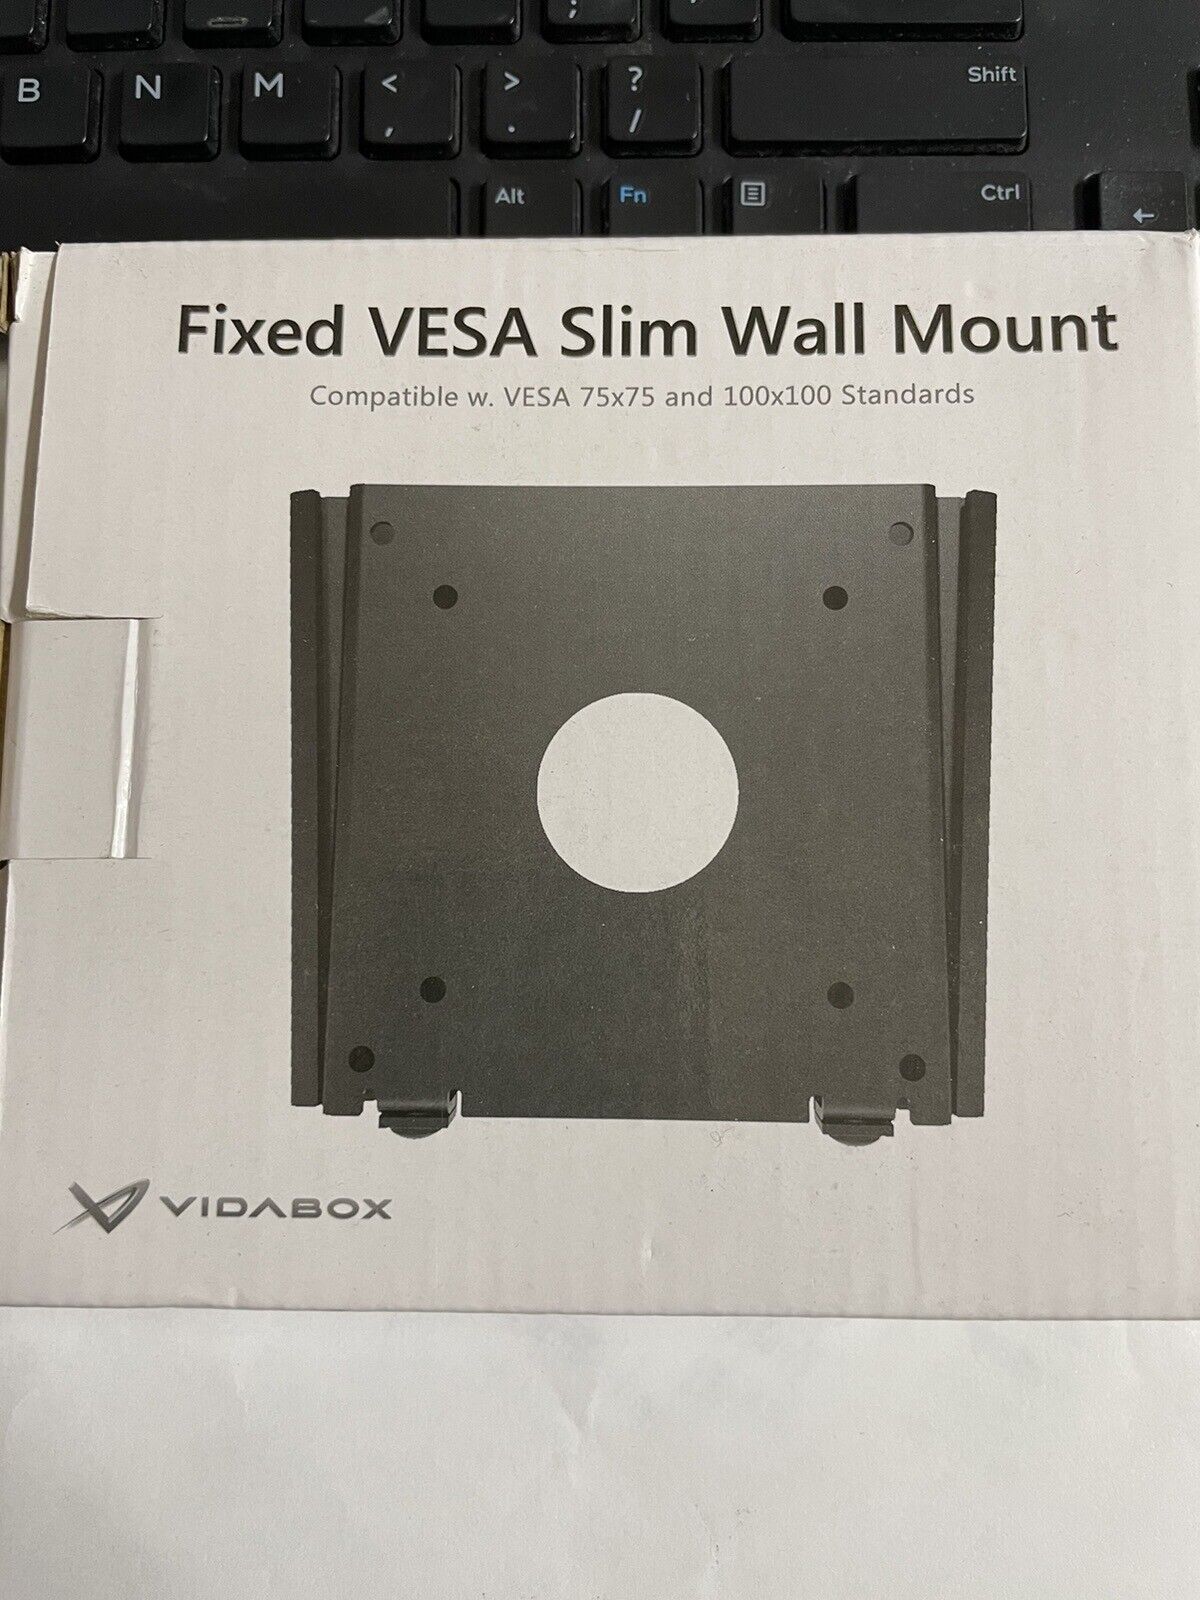 Vidabox - VB-VESA-MNT-FSW - Fixed VESA Slim Wall Mount